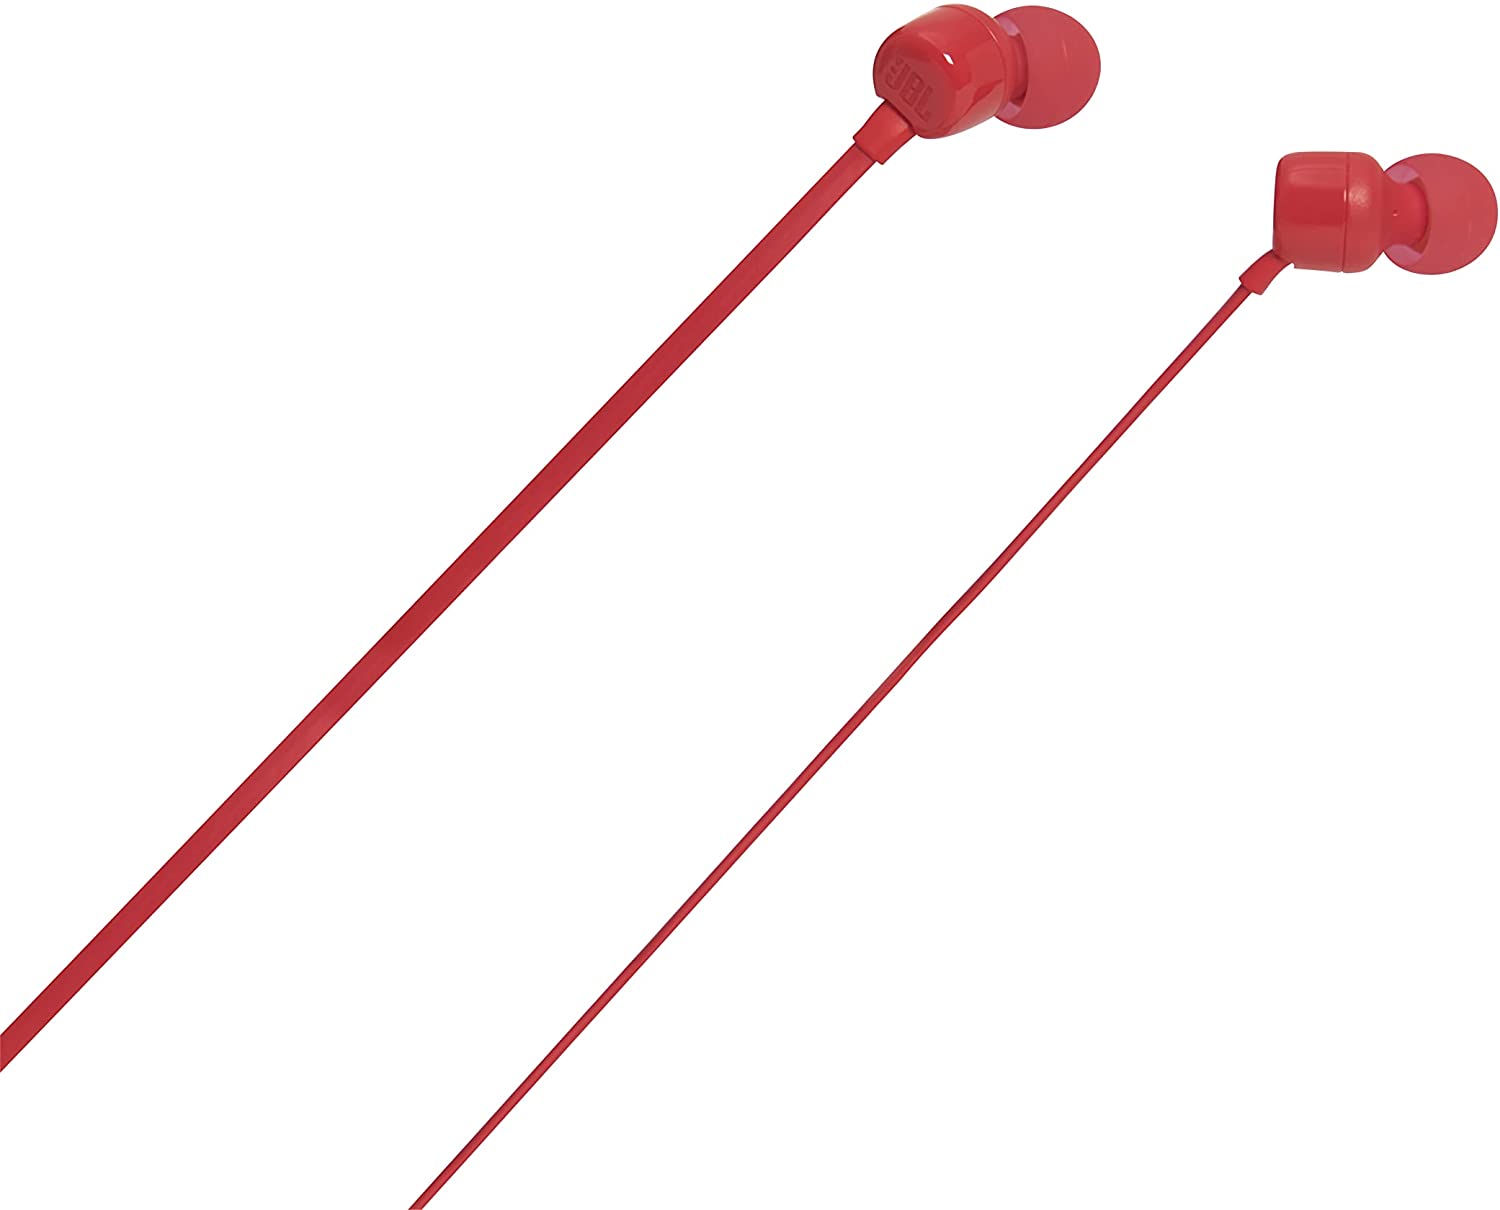 JBL T110 In Ear Wired Headphone Red